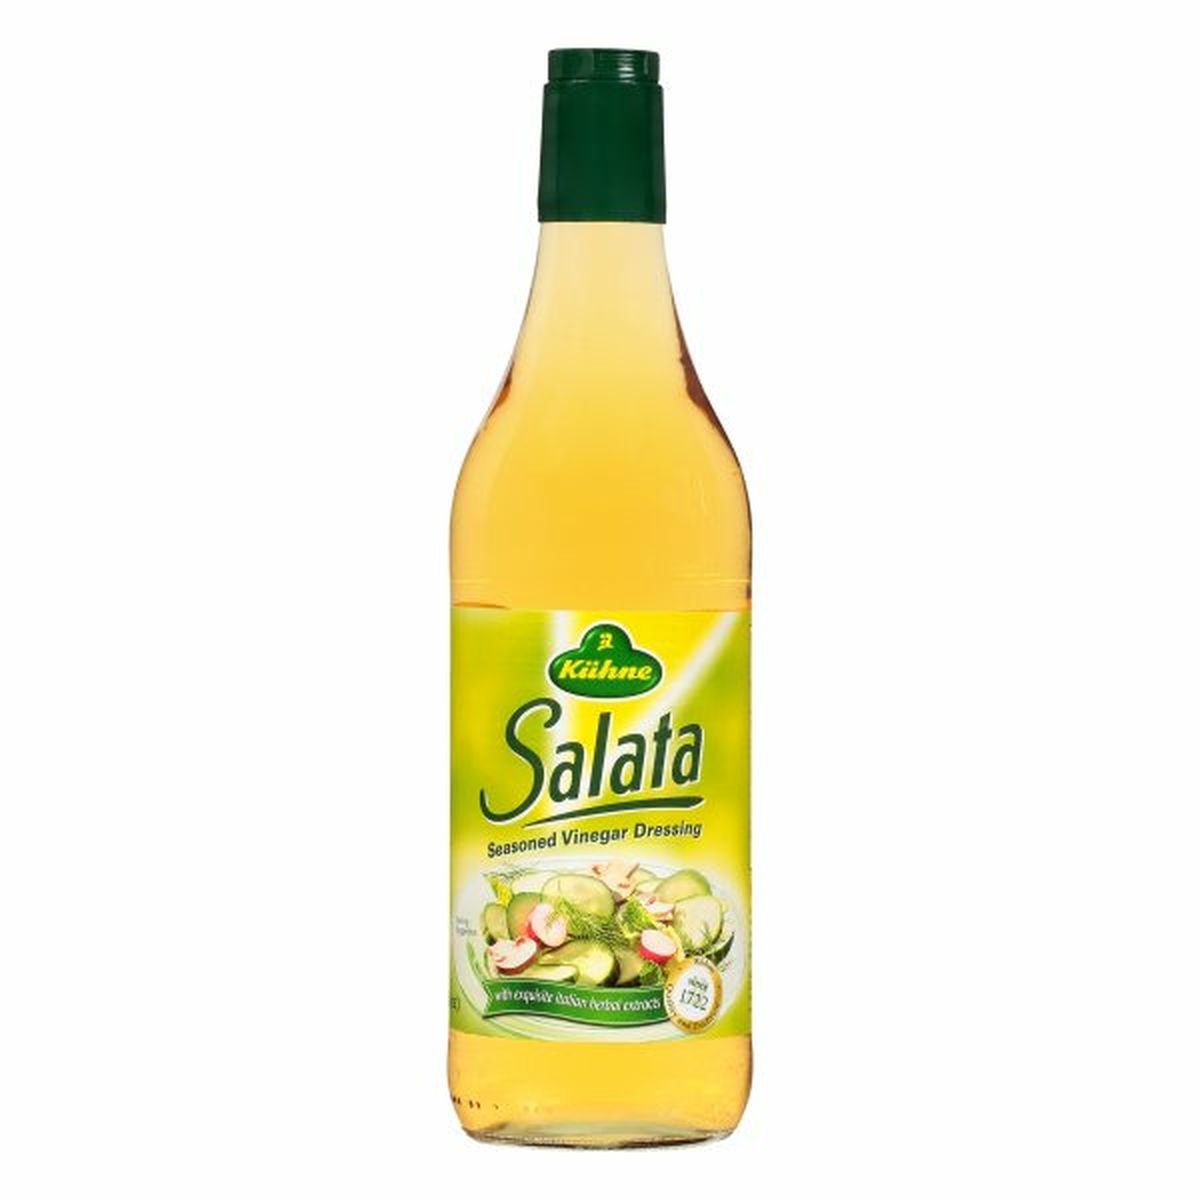 Calories in KÃ¼hne Salata Dressing, Seasoned Vinegar